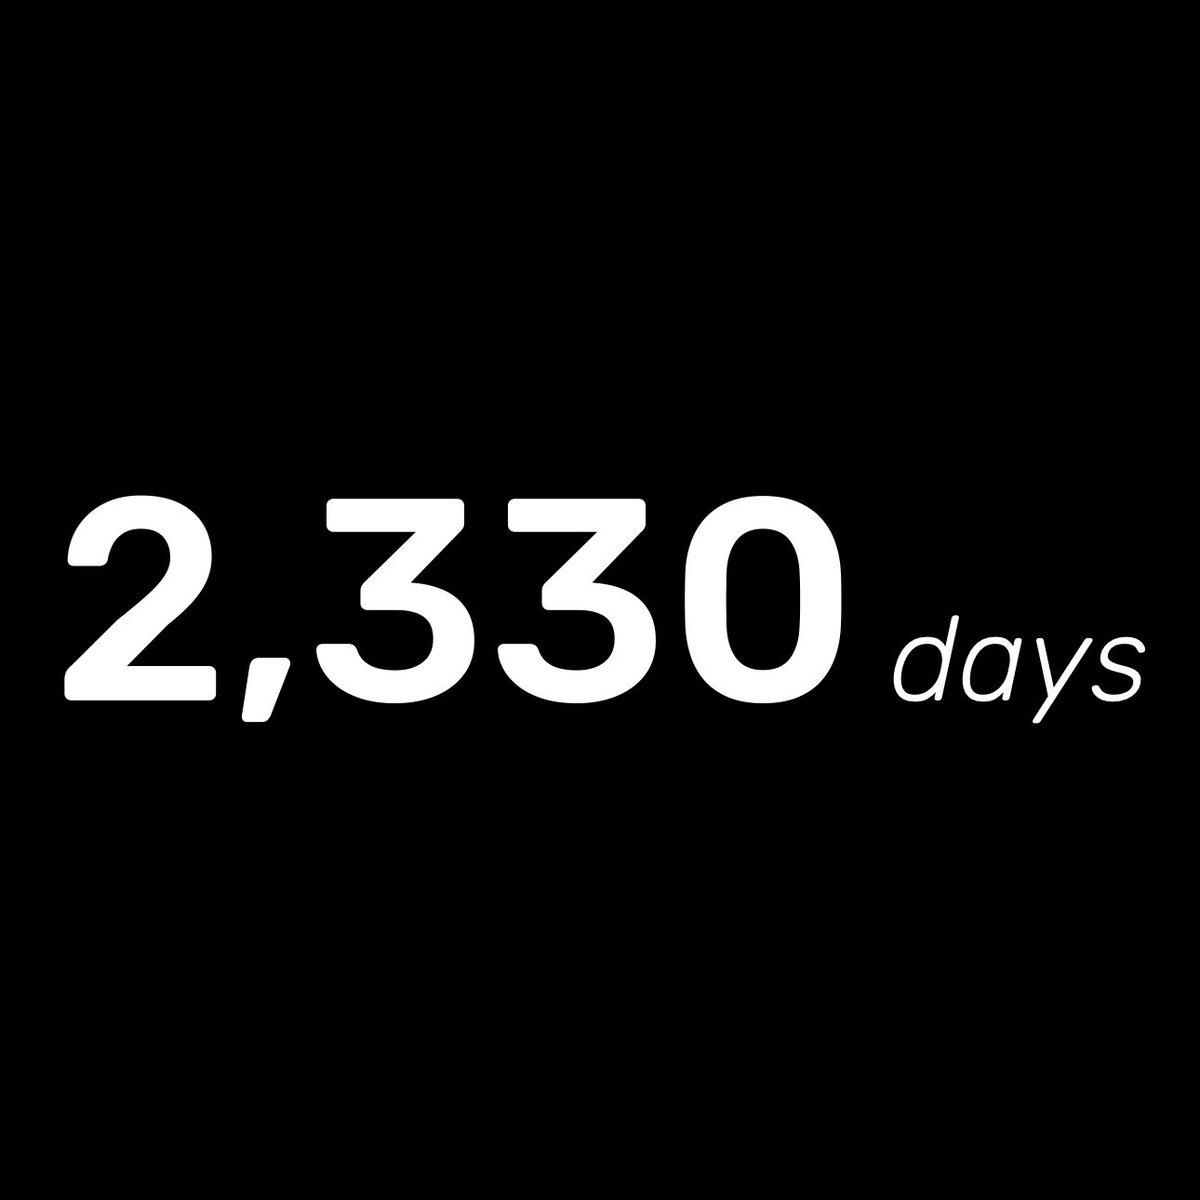 How many days has Colin Kaepernick been denied work in the NFL? We’re counting. https://t.co/H3vJlOMcPq https://t.co/d7tVHgRKw4